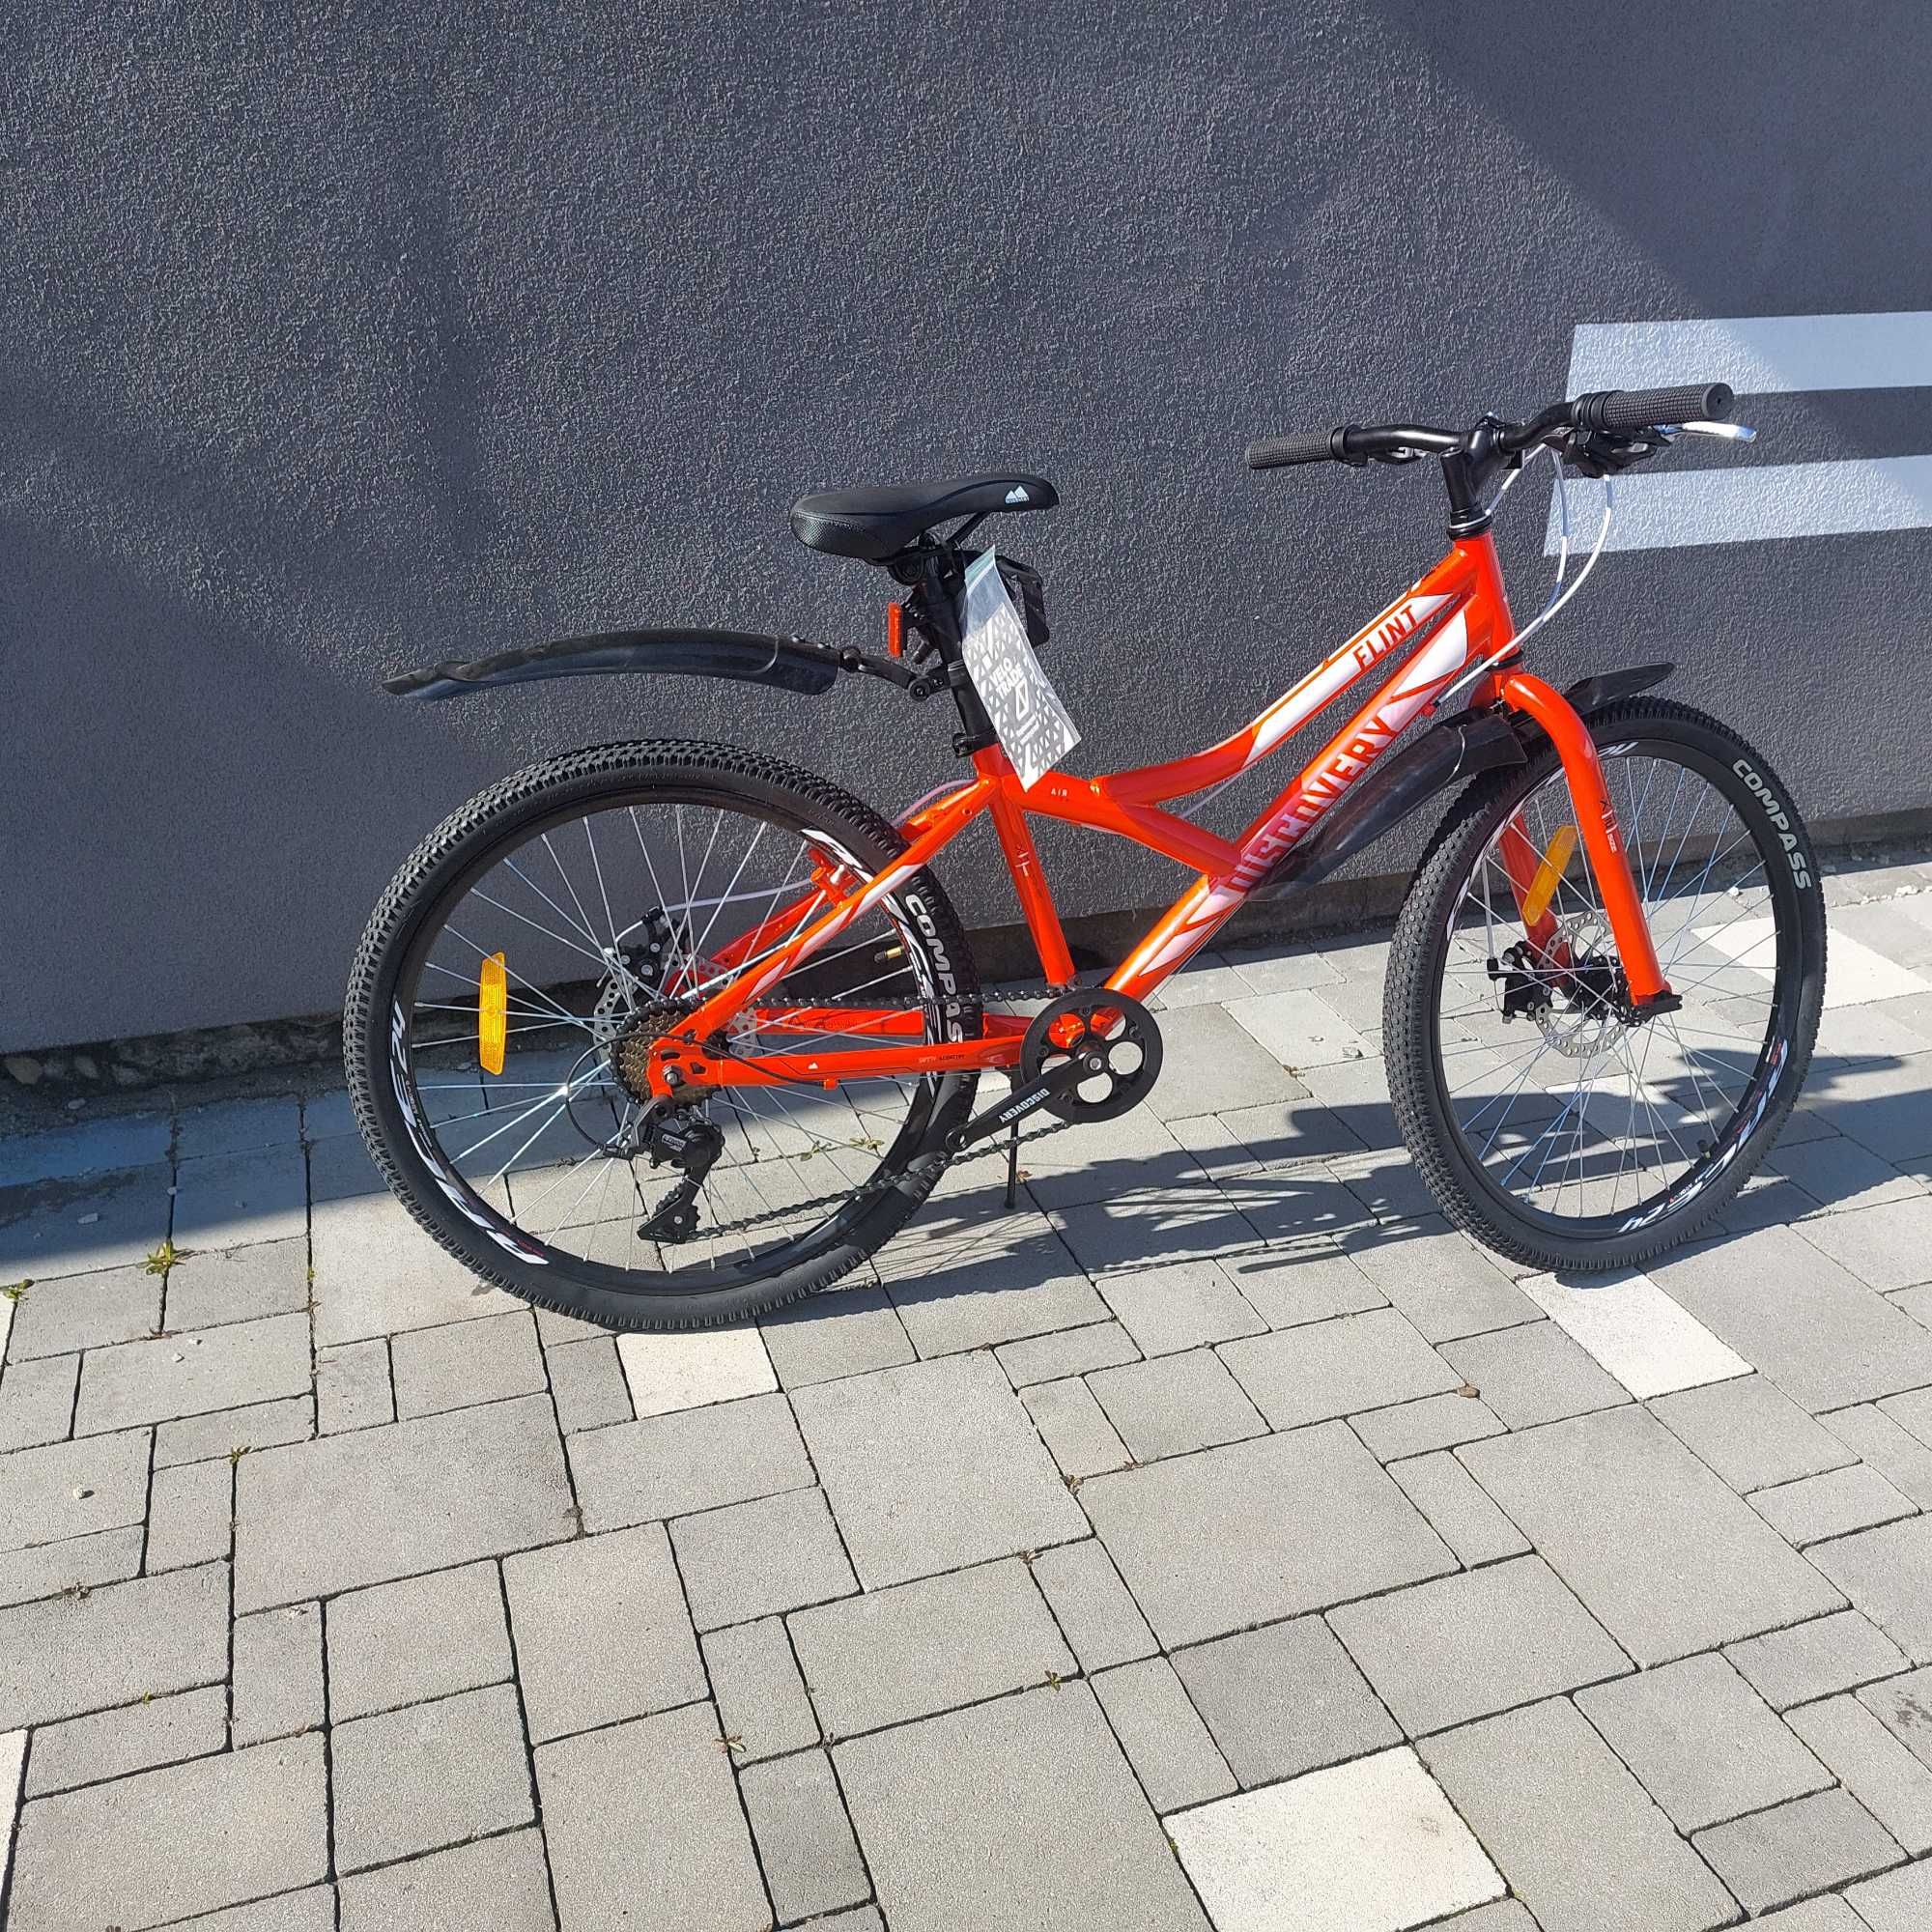 Велосипед Discovery FLINT рама-13, колеса-24, новий на зріст 130-150см